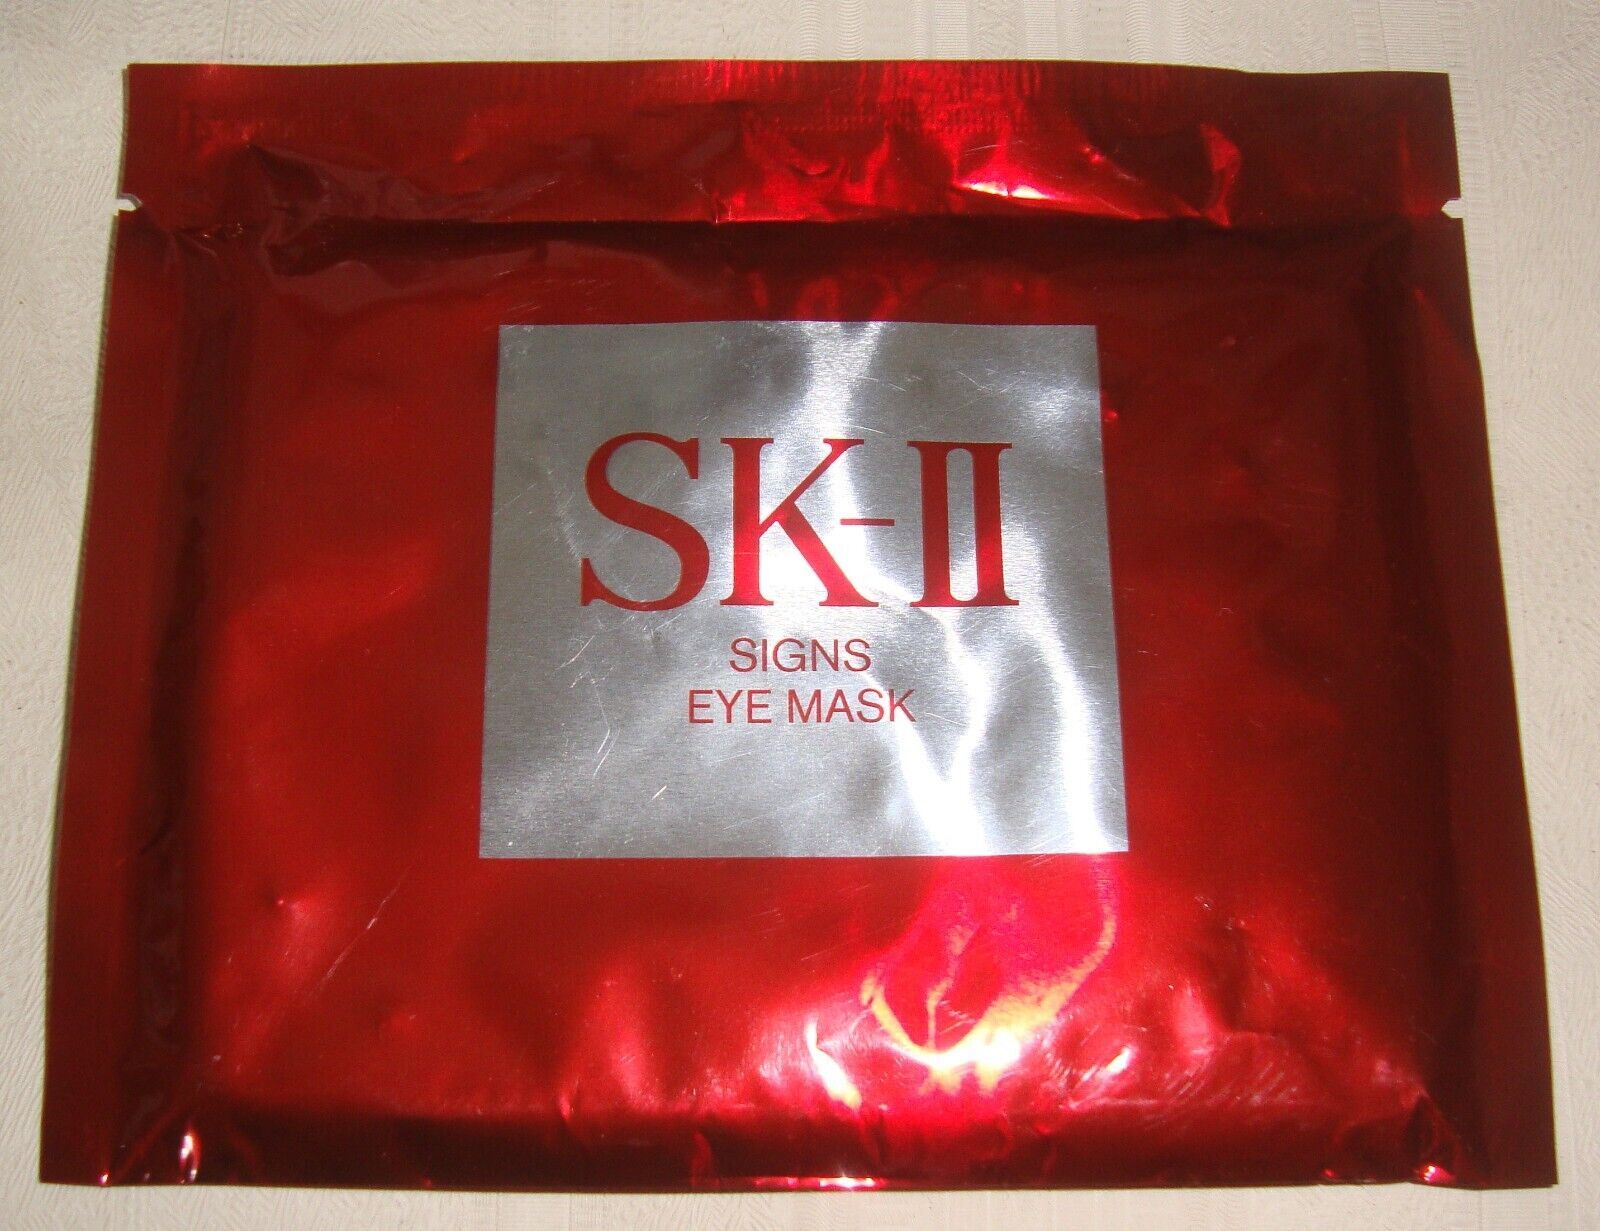 SK II Signs Eye Mask. Moisturizing Revival Masks - $9.89